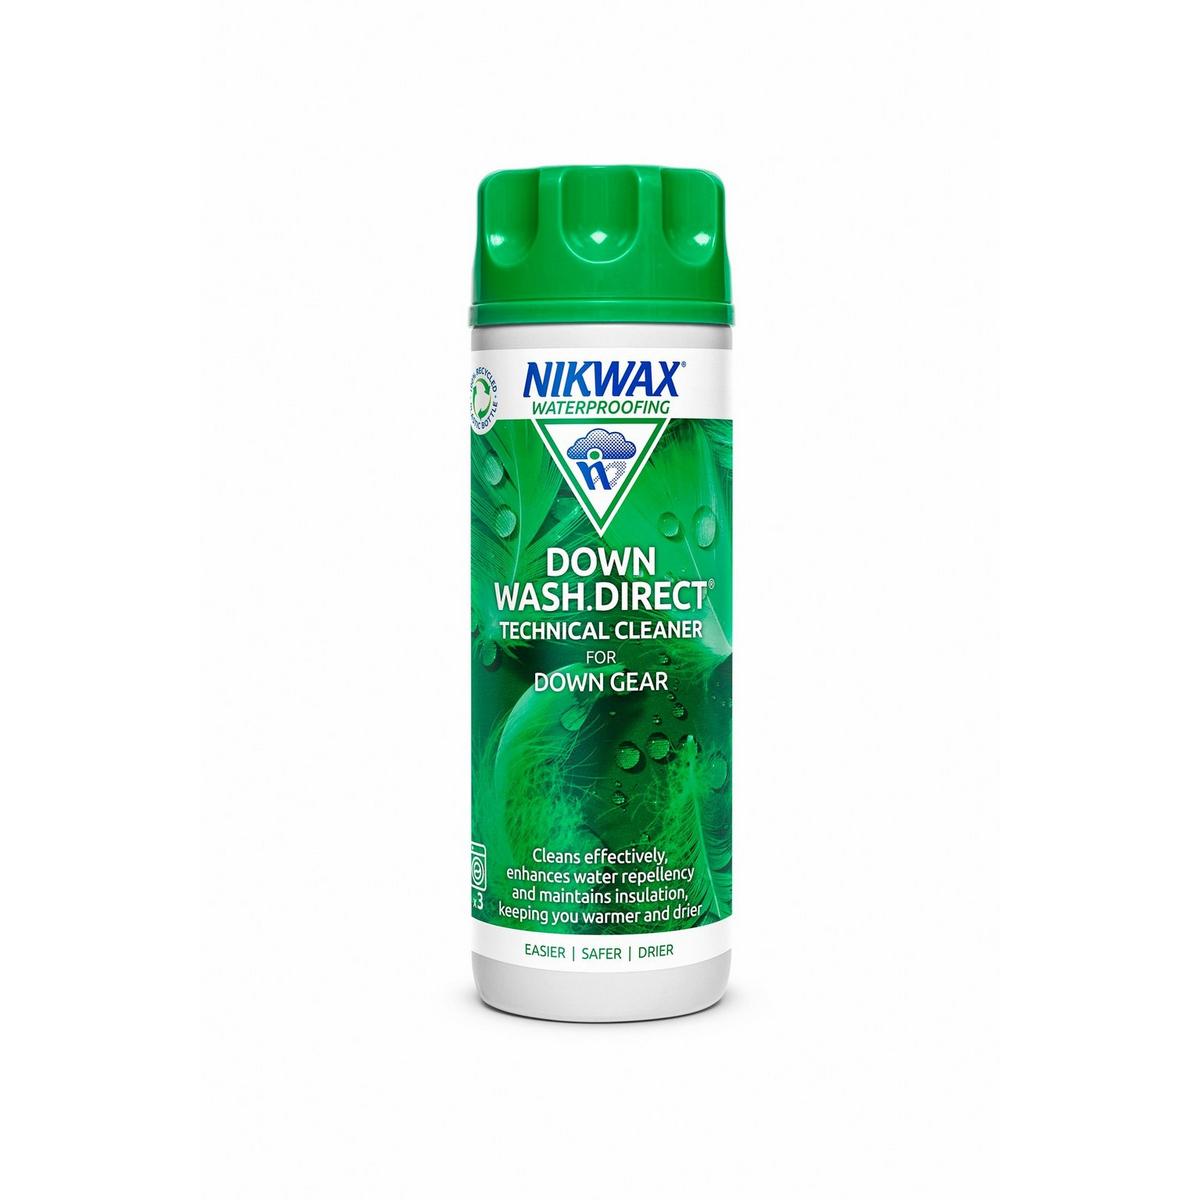 Nikwax Down Wash.Direct Down Gear Cleaner - 300ml